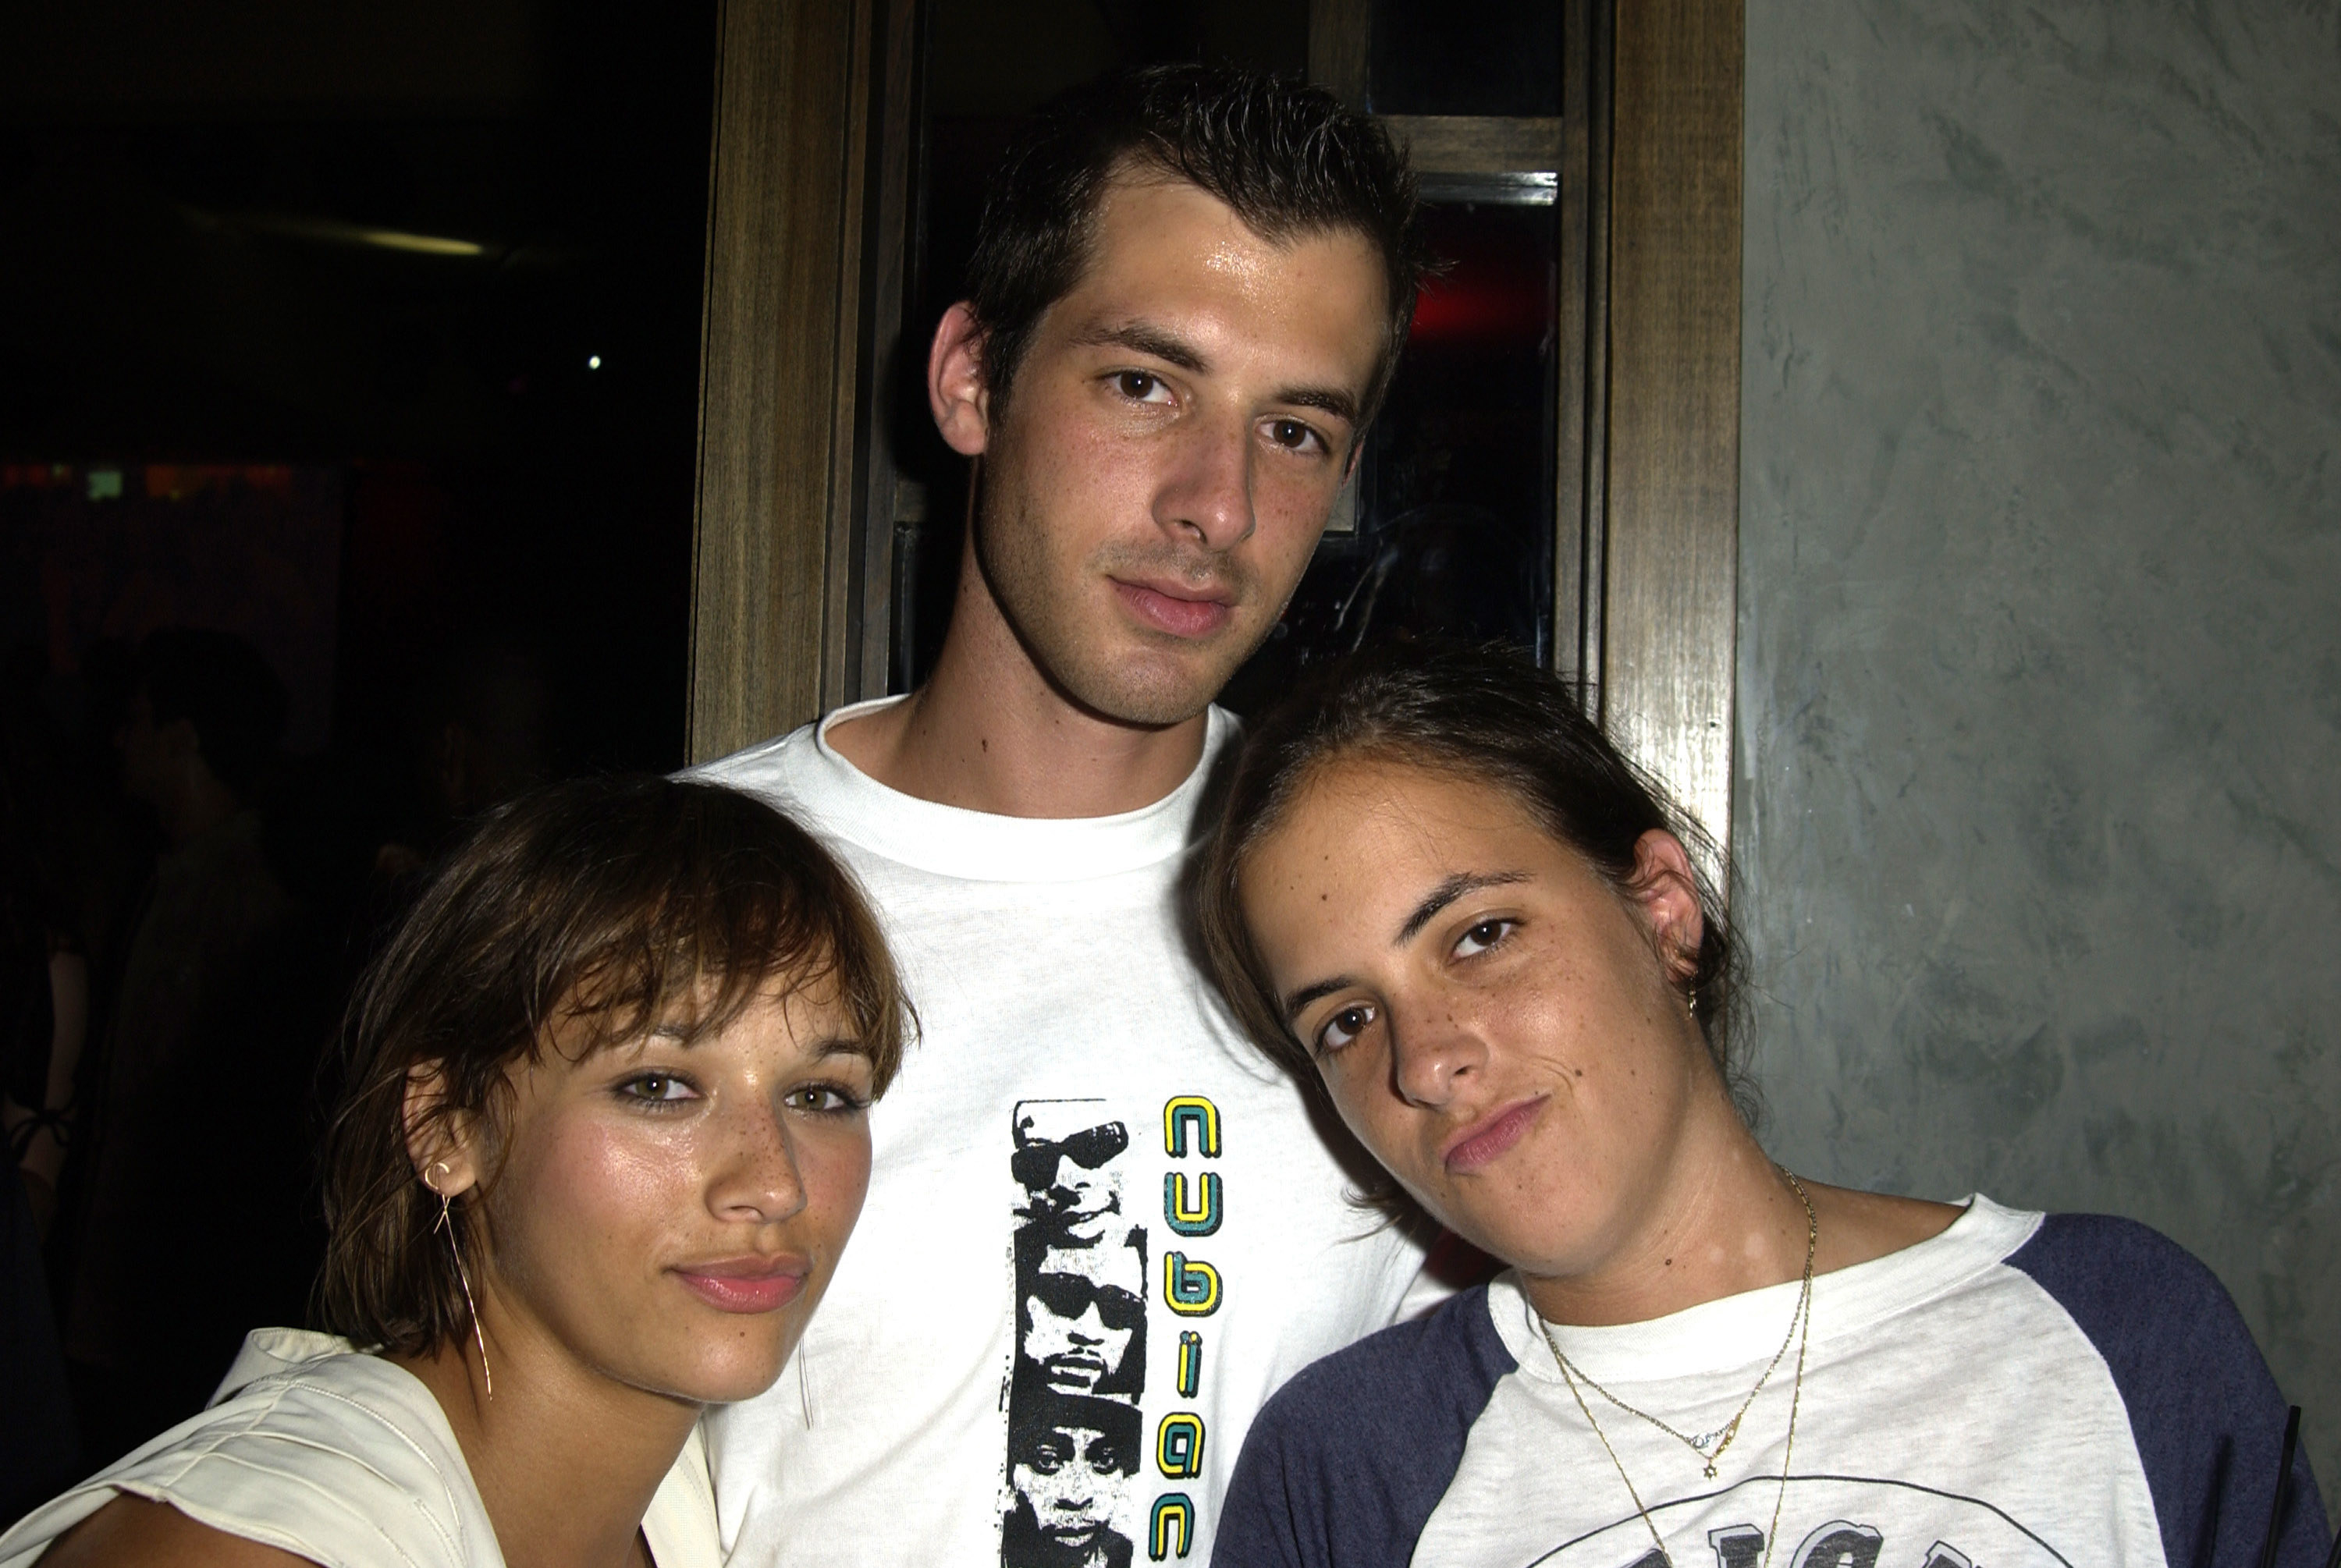 An old photo of Mark Ronson and Rashida Jones posing with his sister Sam Ronson